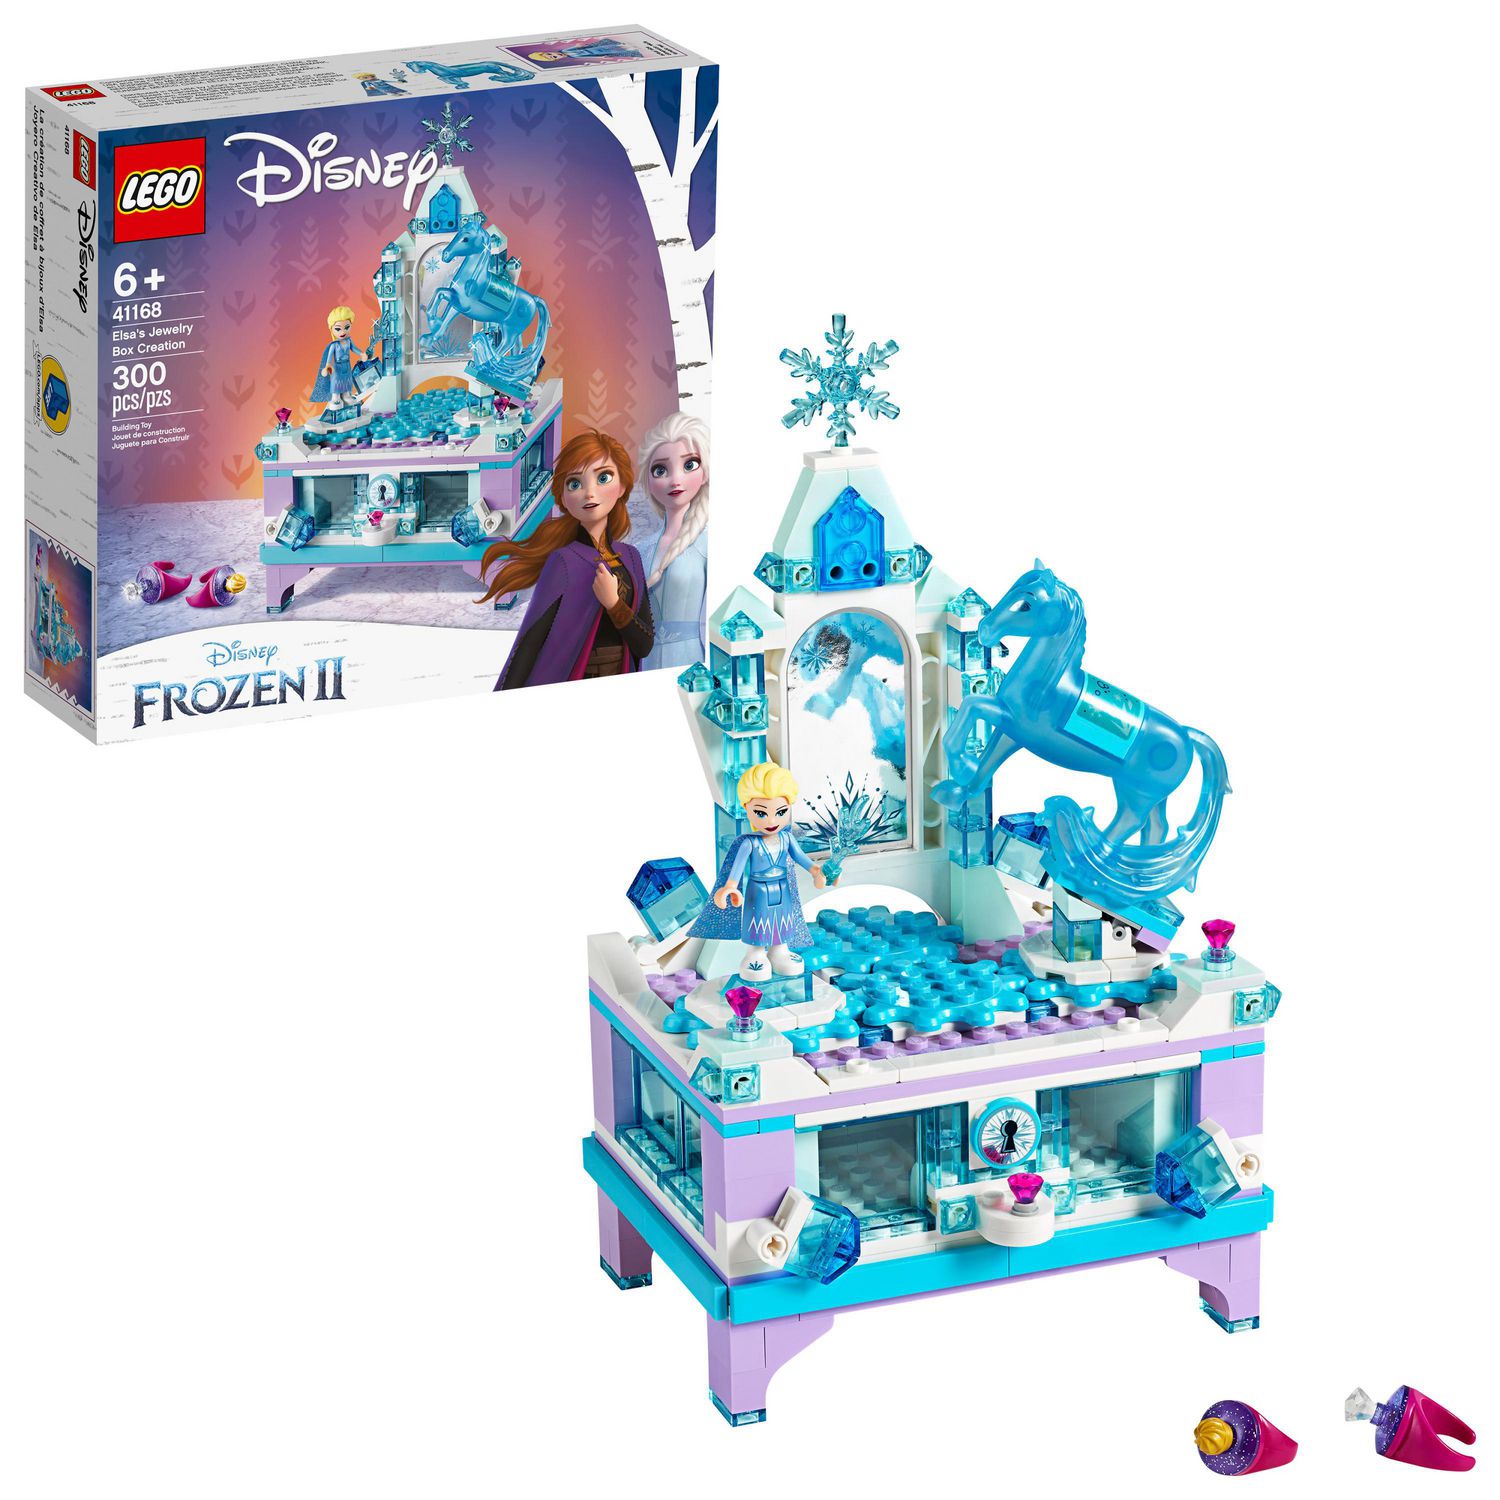 New 2019 300 Pieces LEGO Disney Frozen II Elsa’s Jewelry Box Creation 41168 Disney Jewelry Box Building Kit with Elsa Mini Doll and Nokk Figure for Creative Play 